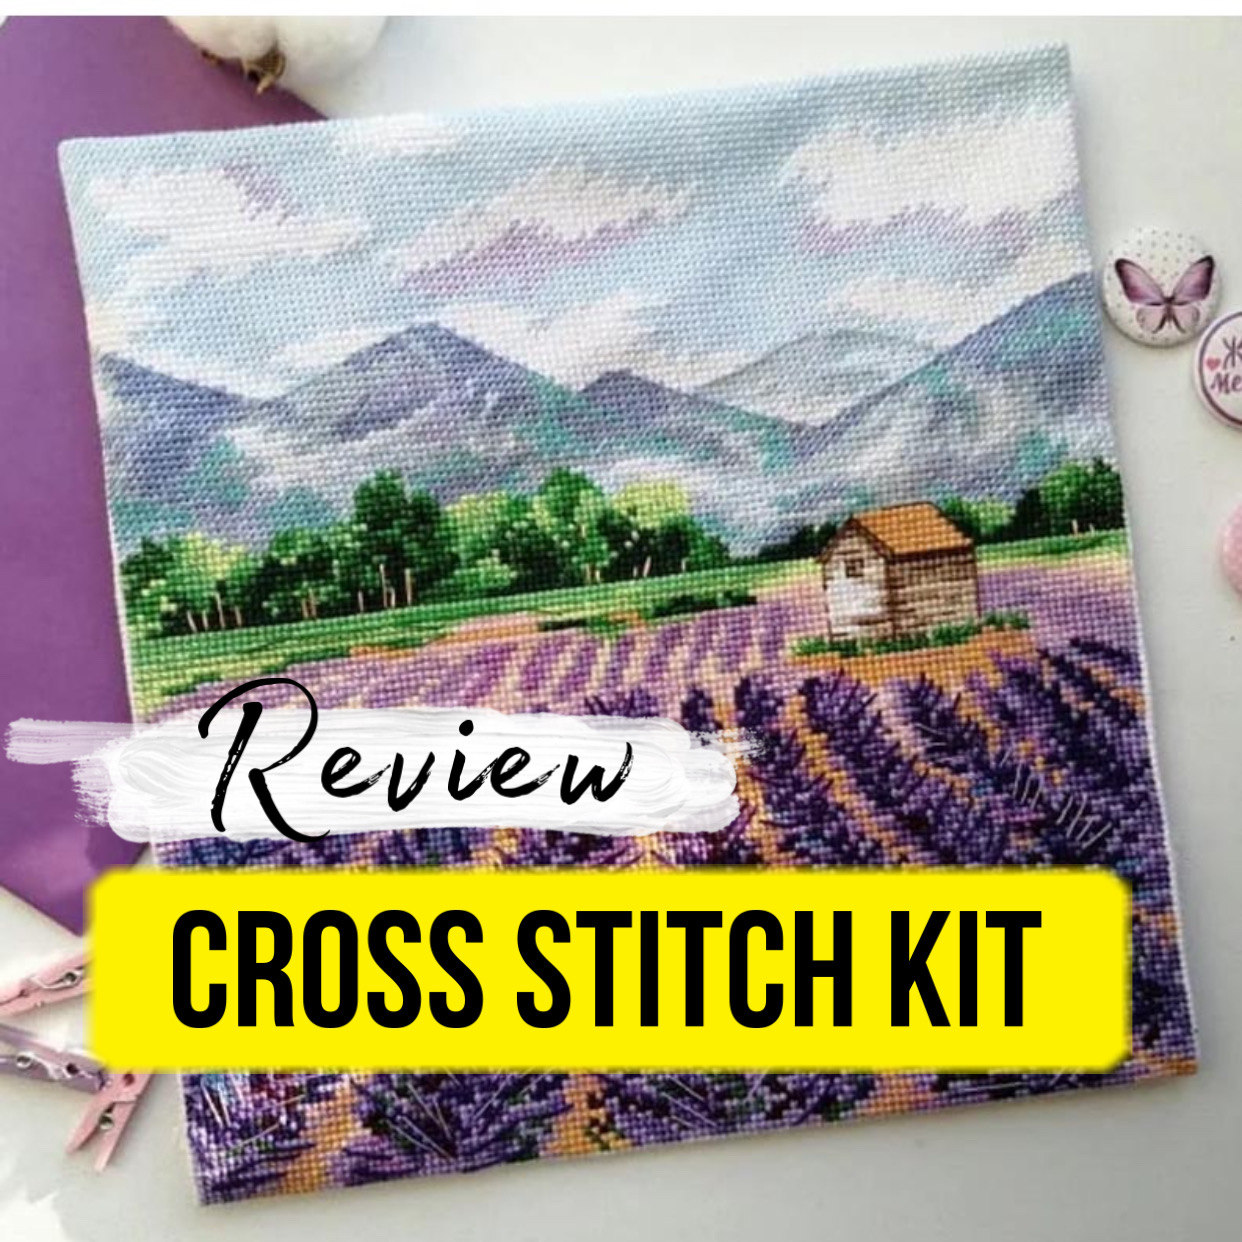 “Provence” Oven Cross Stitch Starter Kit Review